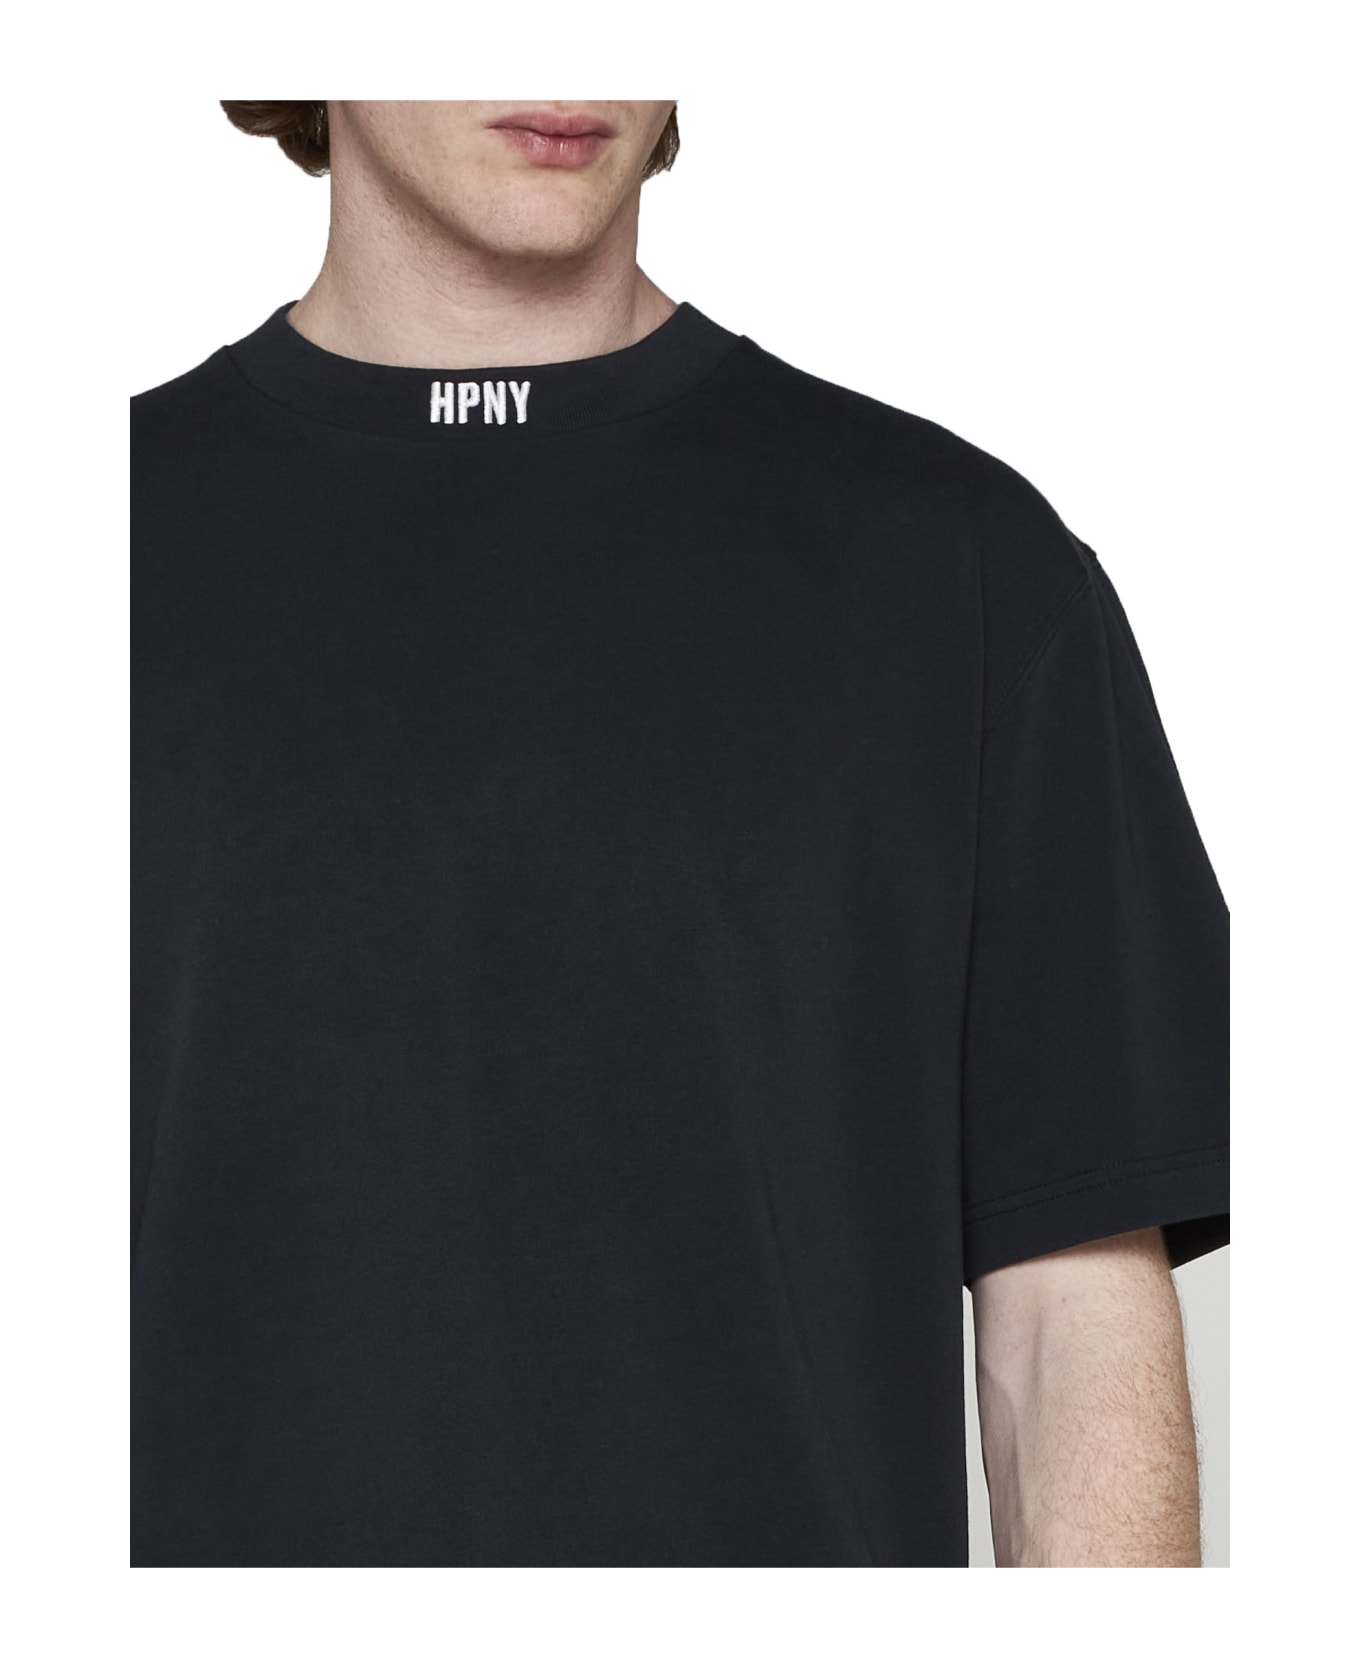 HERON PRESTON Hpny Embroidered T-shirt - Black シャツ